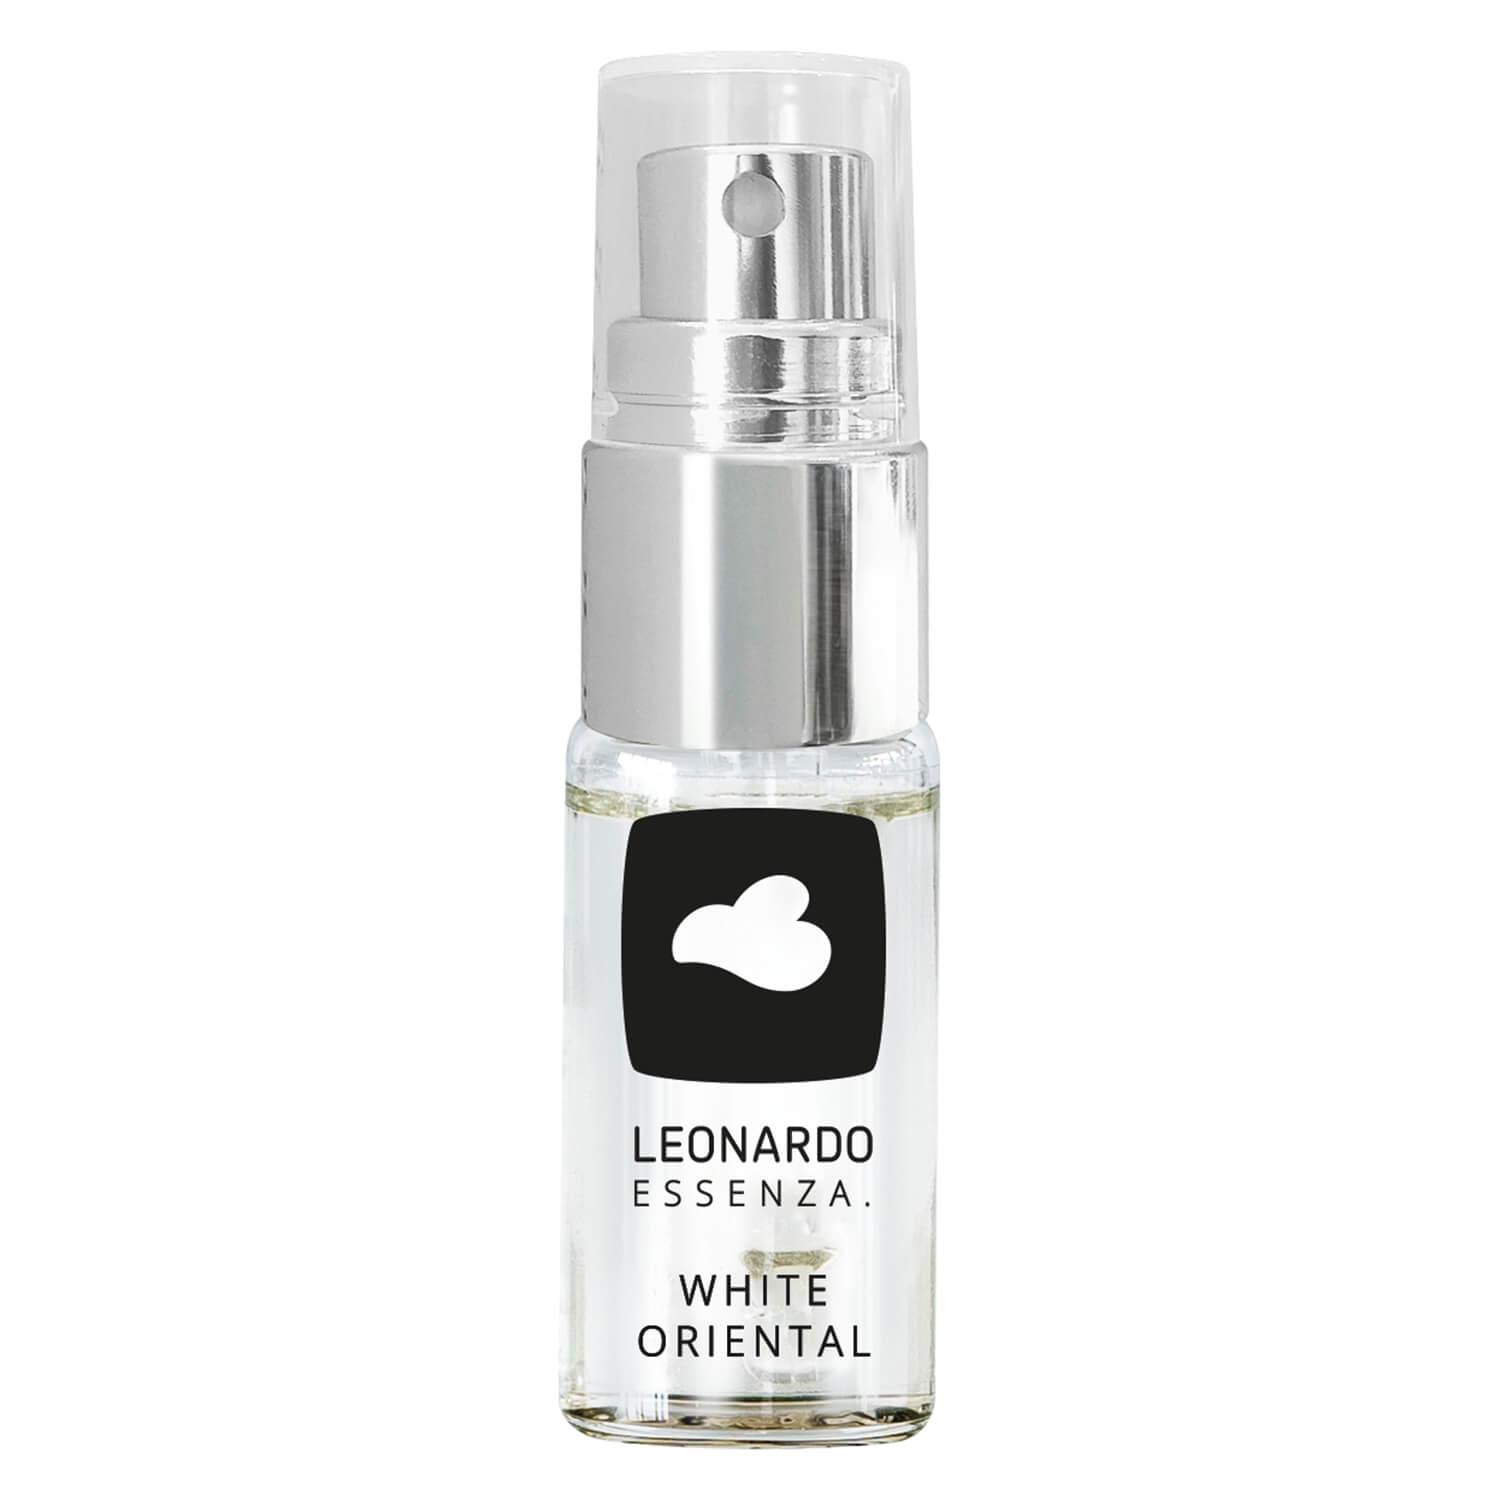 LEONARDO ESSENZA - Fragrance White Oriental